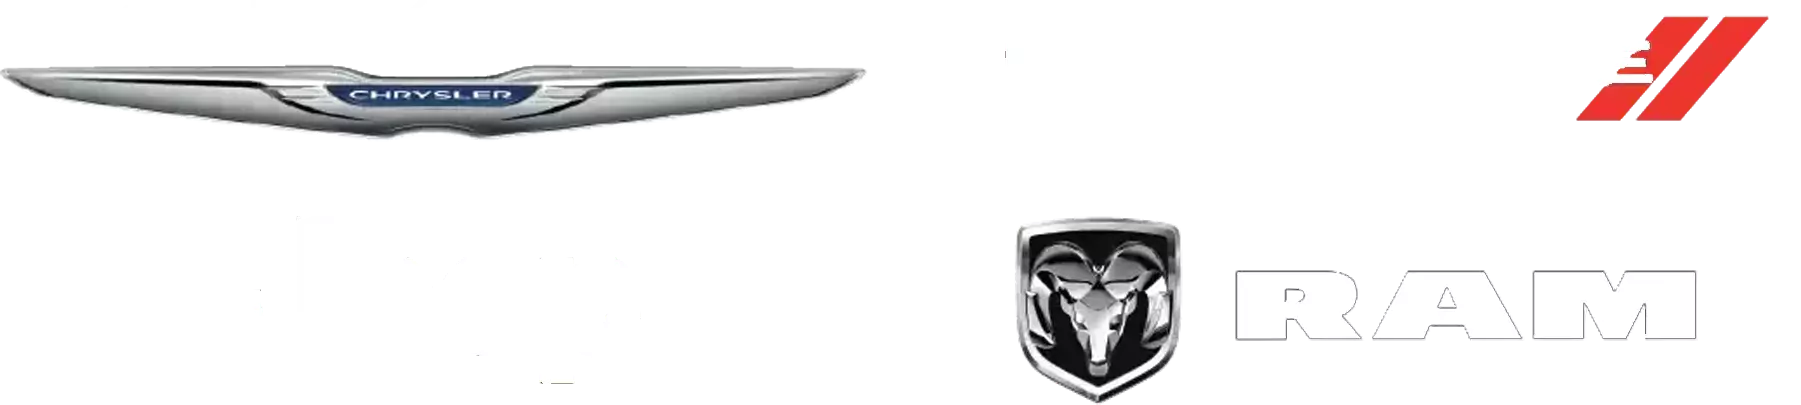 Sarchione Chrysler Dodge Jeep RAM of Dalton-oem_logo